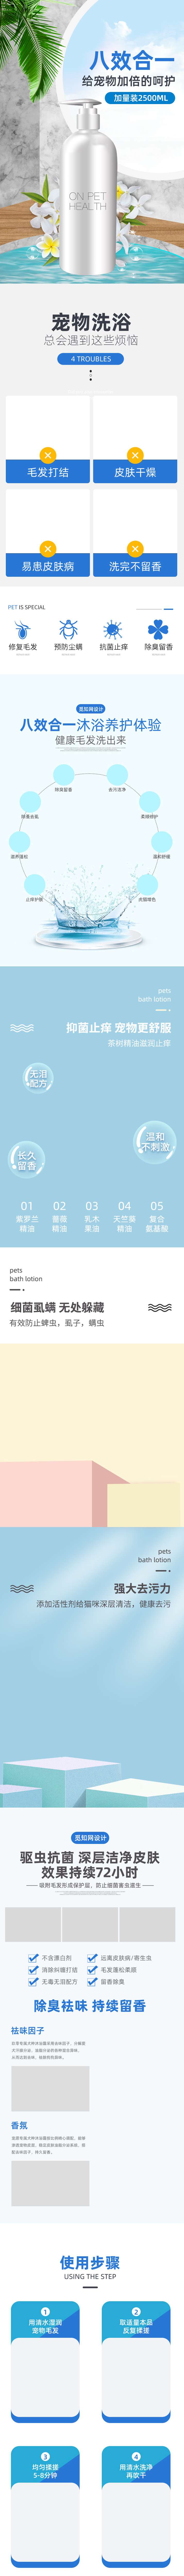 C4D清新蓝色宠物沐浴乳洗护节洗护详情页设计素材